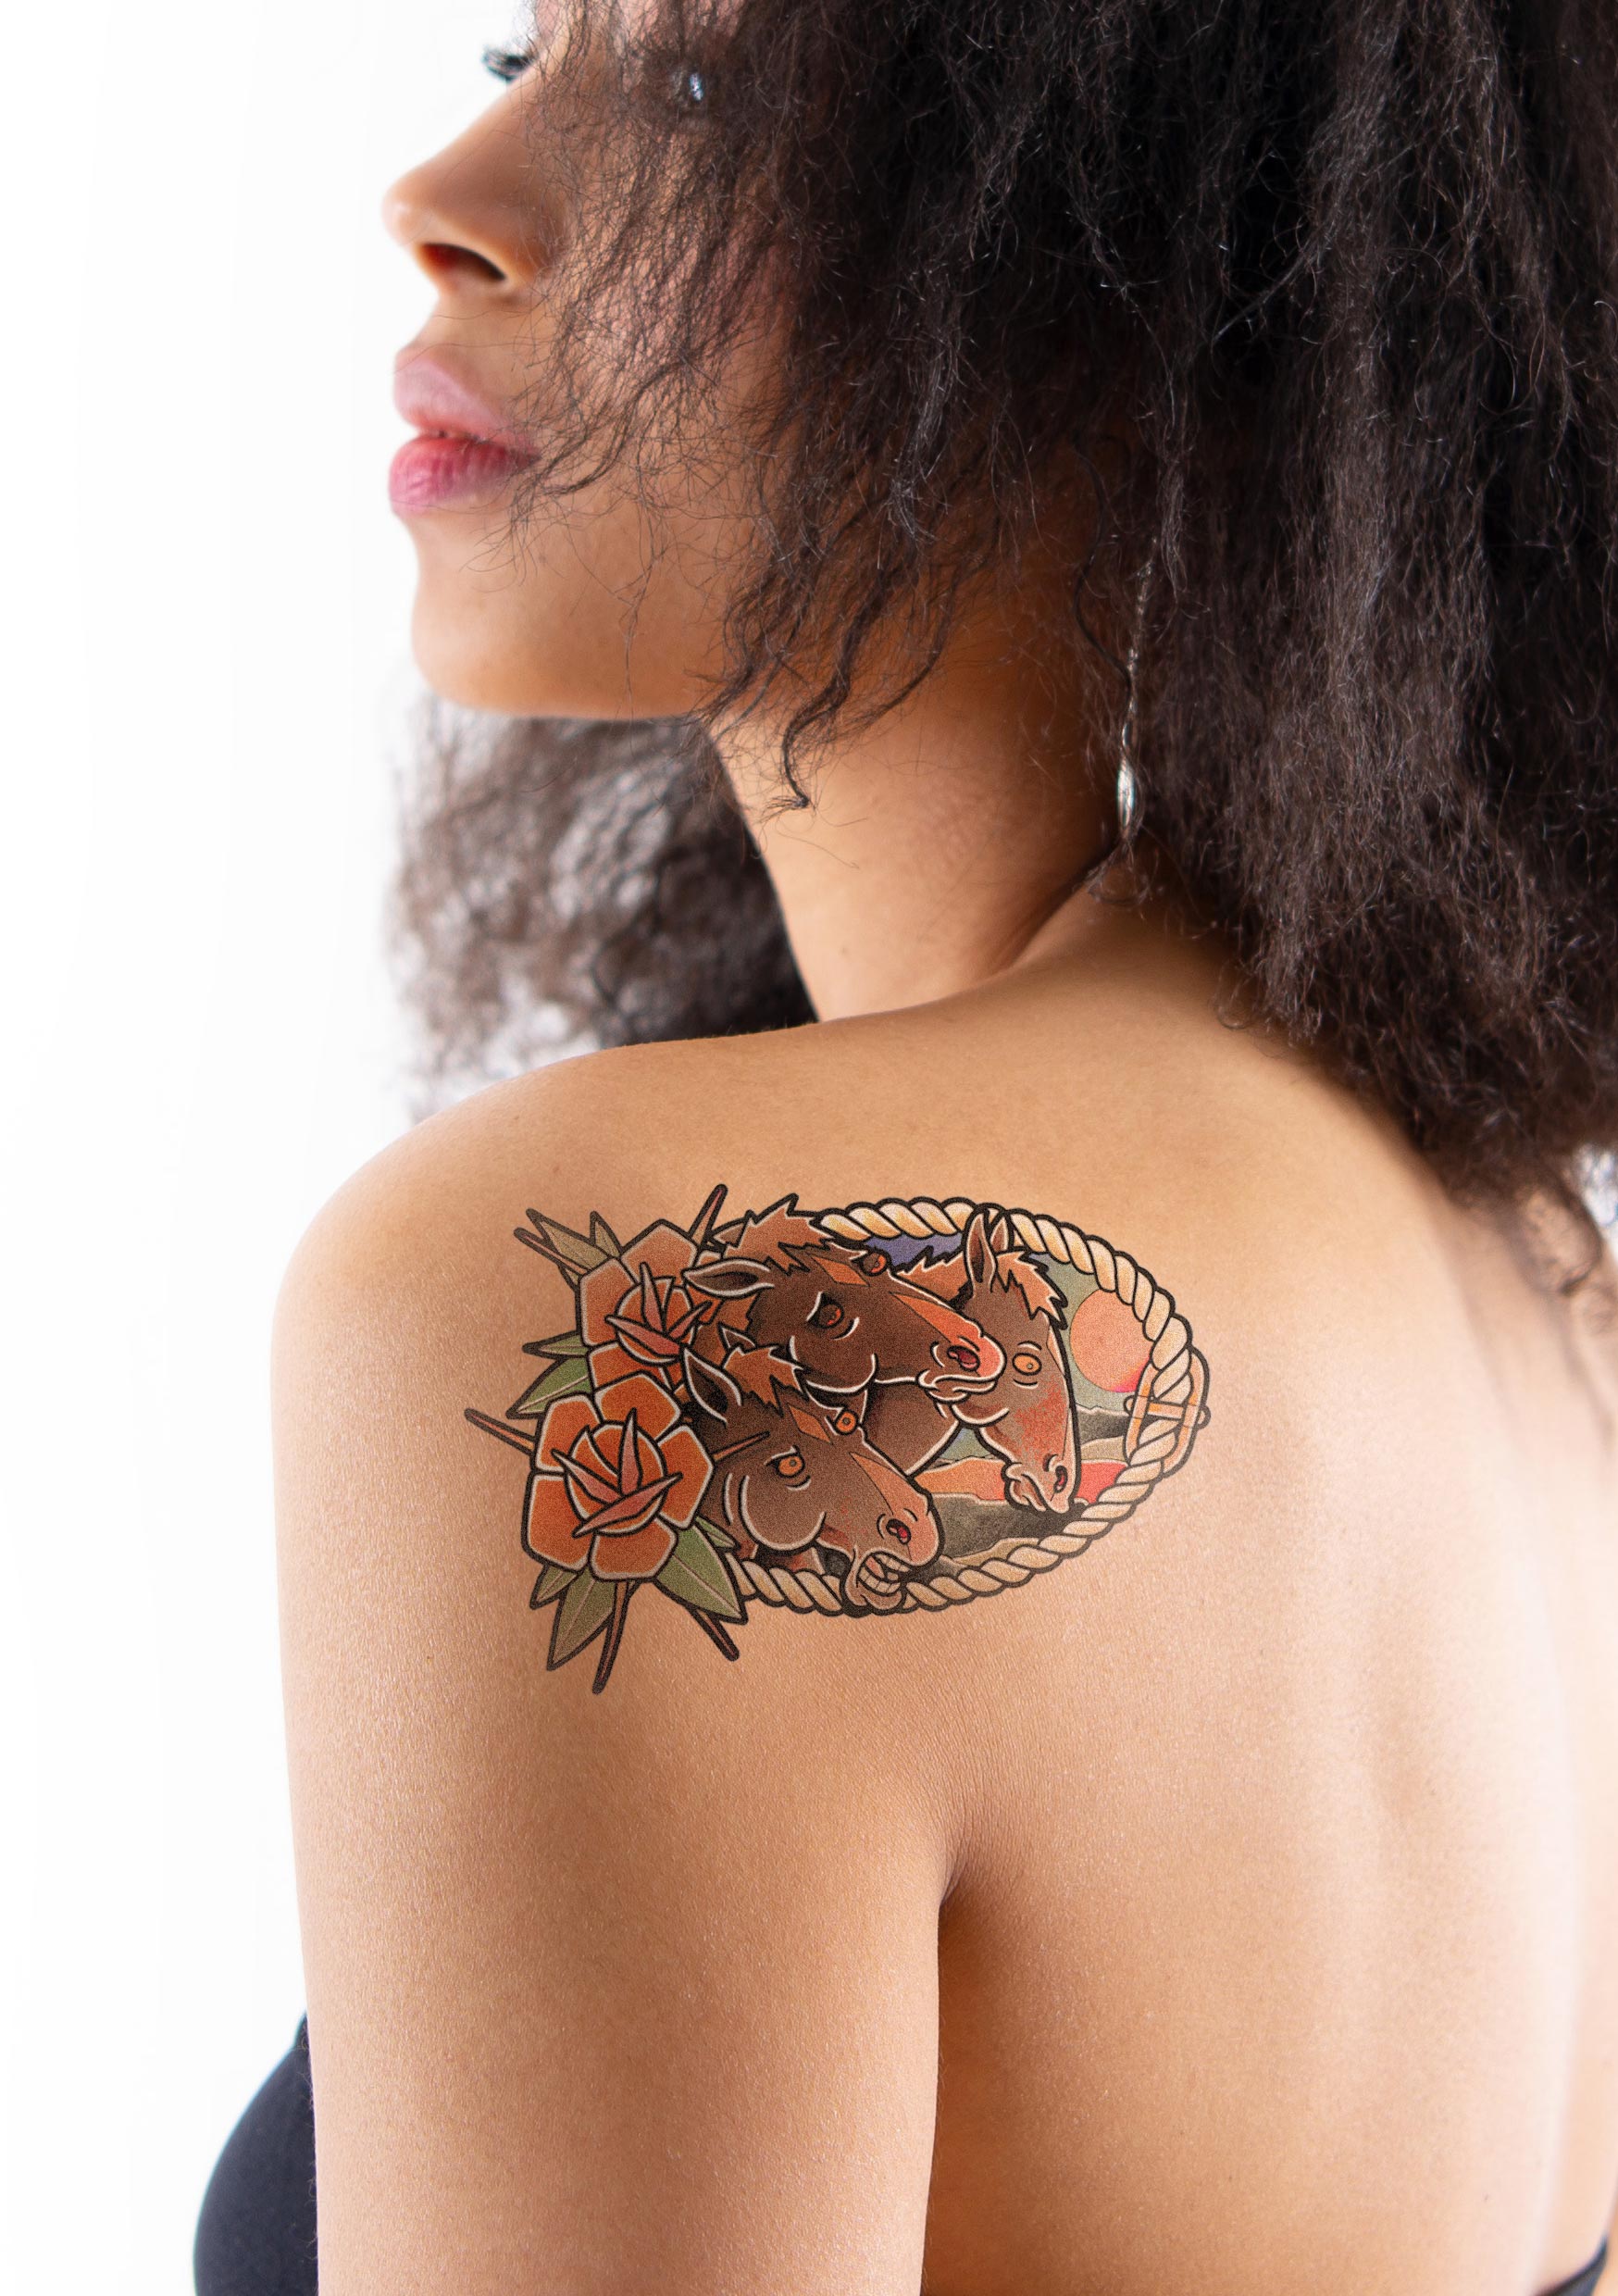 Bojack Horseman Tattoo  Tattoos Sleeve tattoos for women Sleeve tattoos